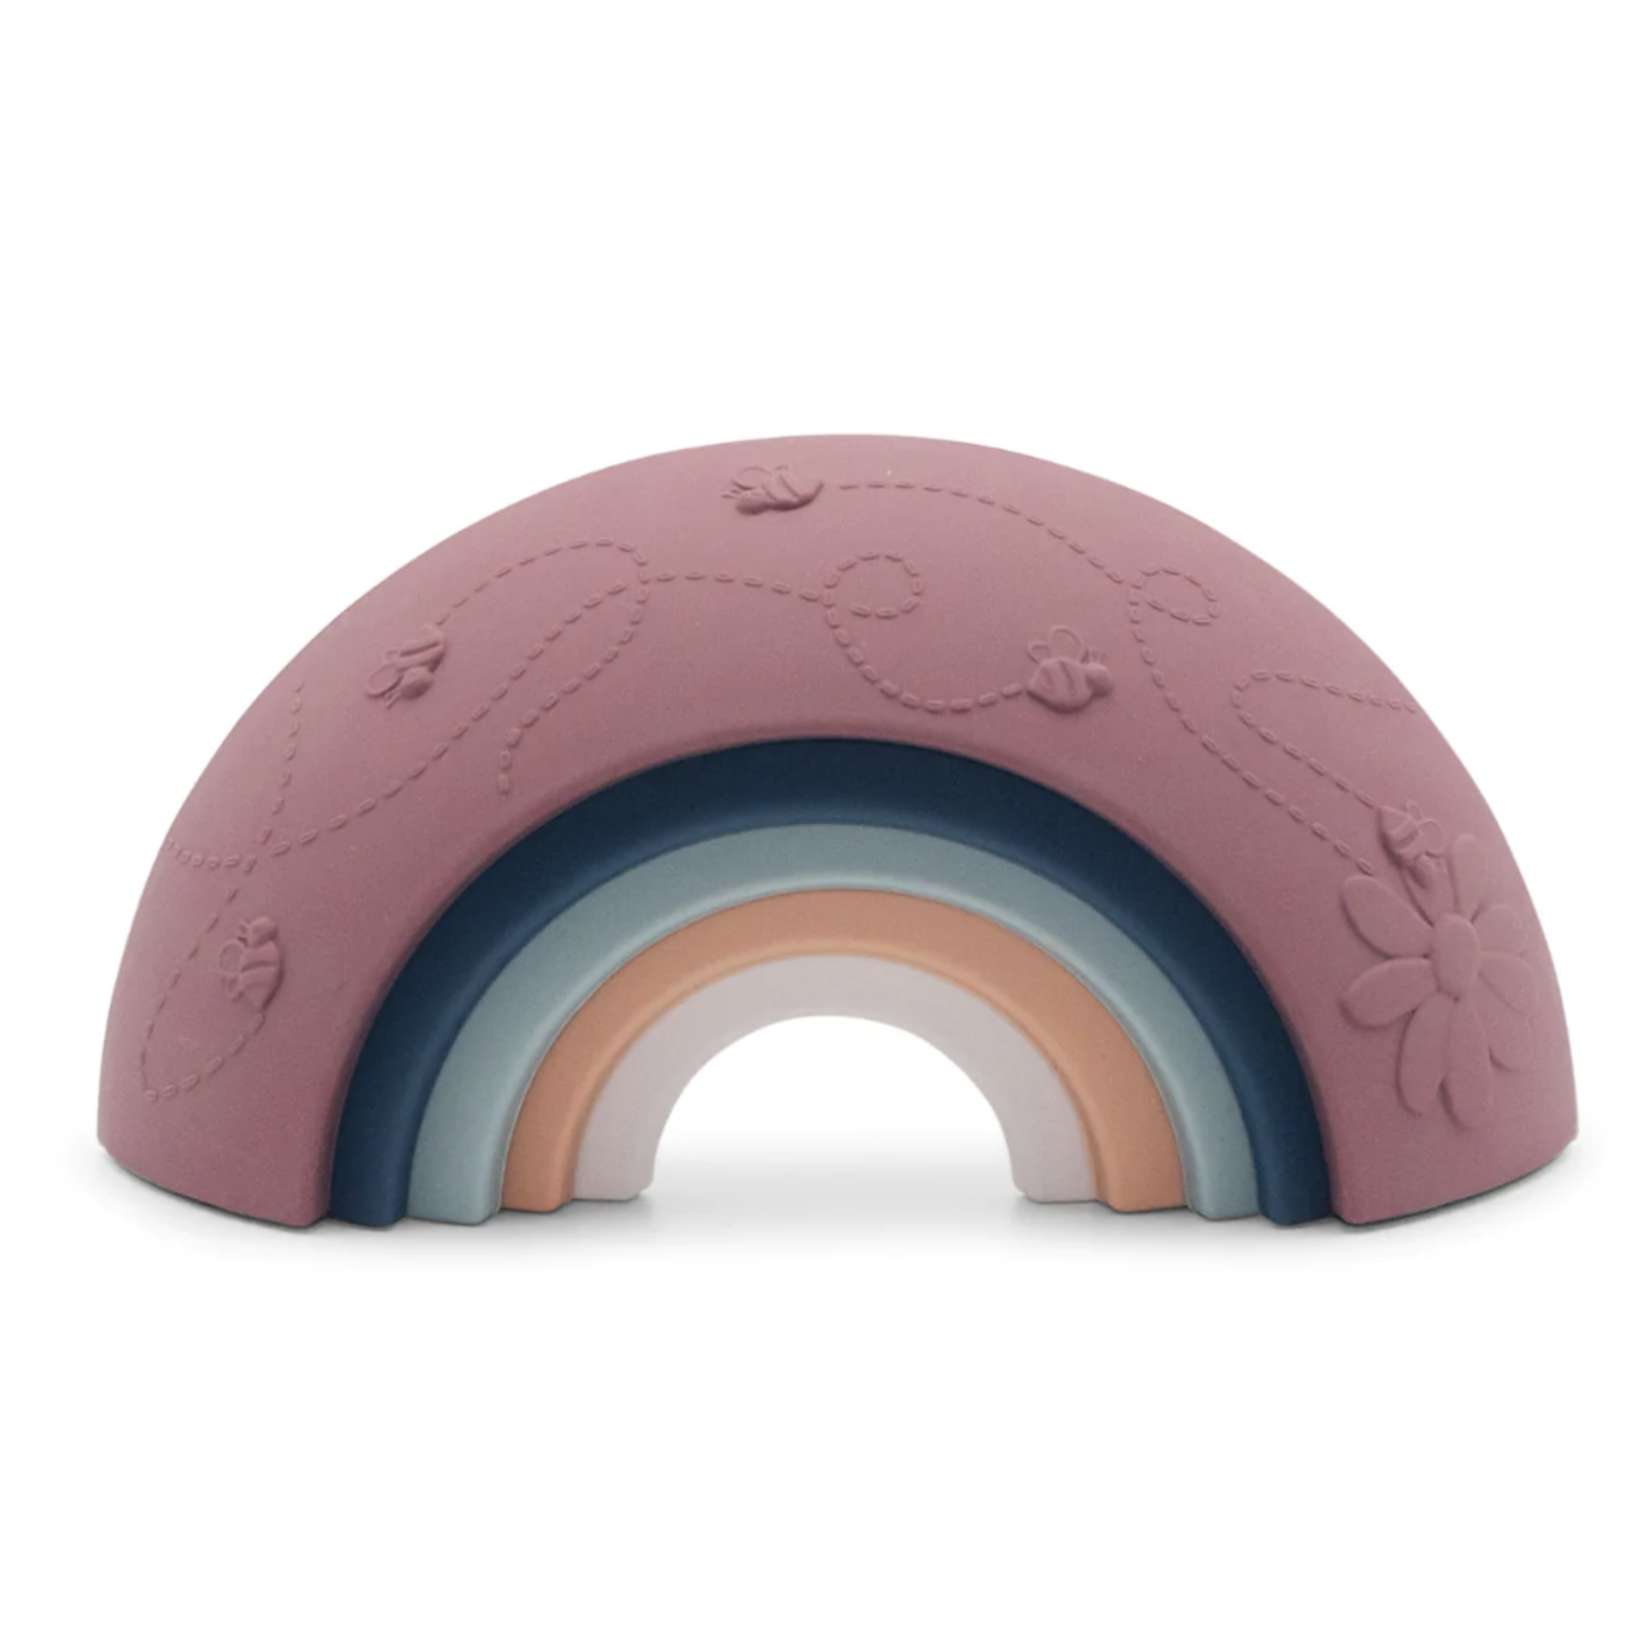 Jellystone Designs Over the Rainbow-Earth